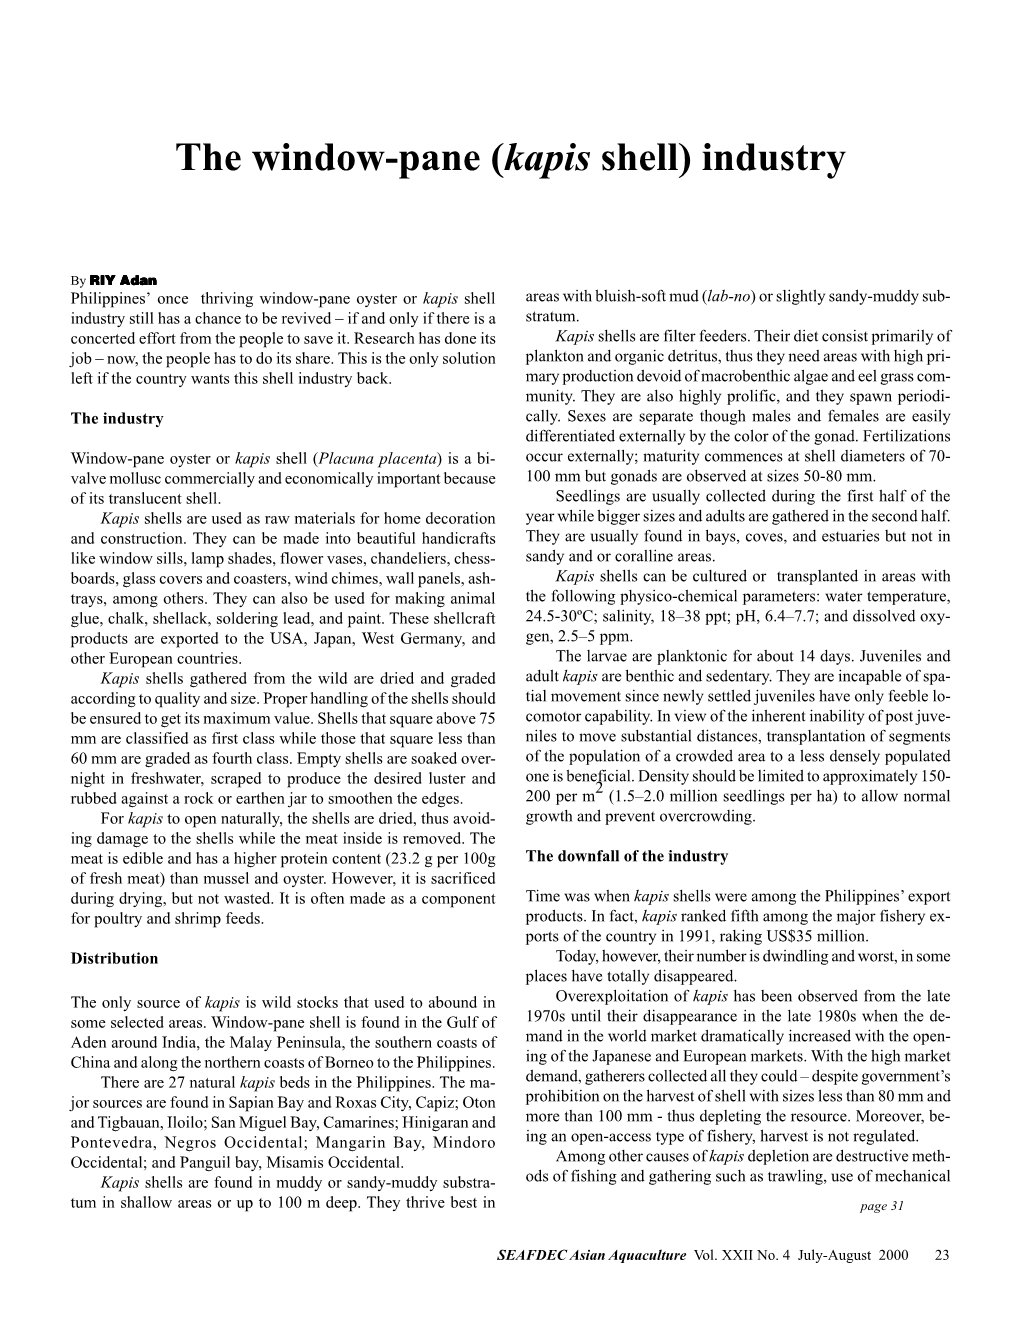 The Window-Pane (Kapis Shell) Industry